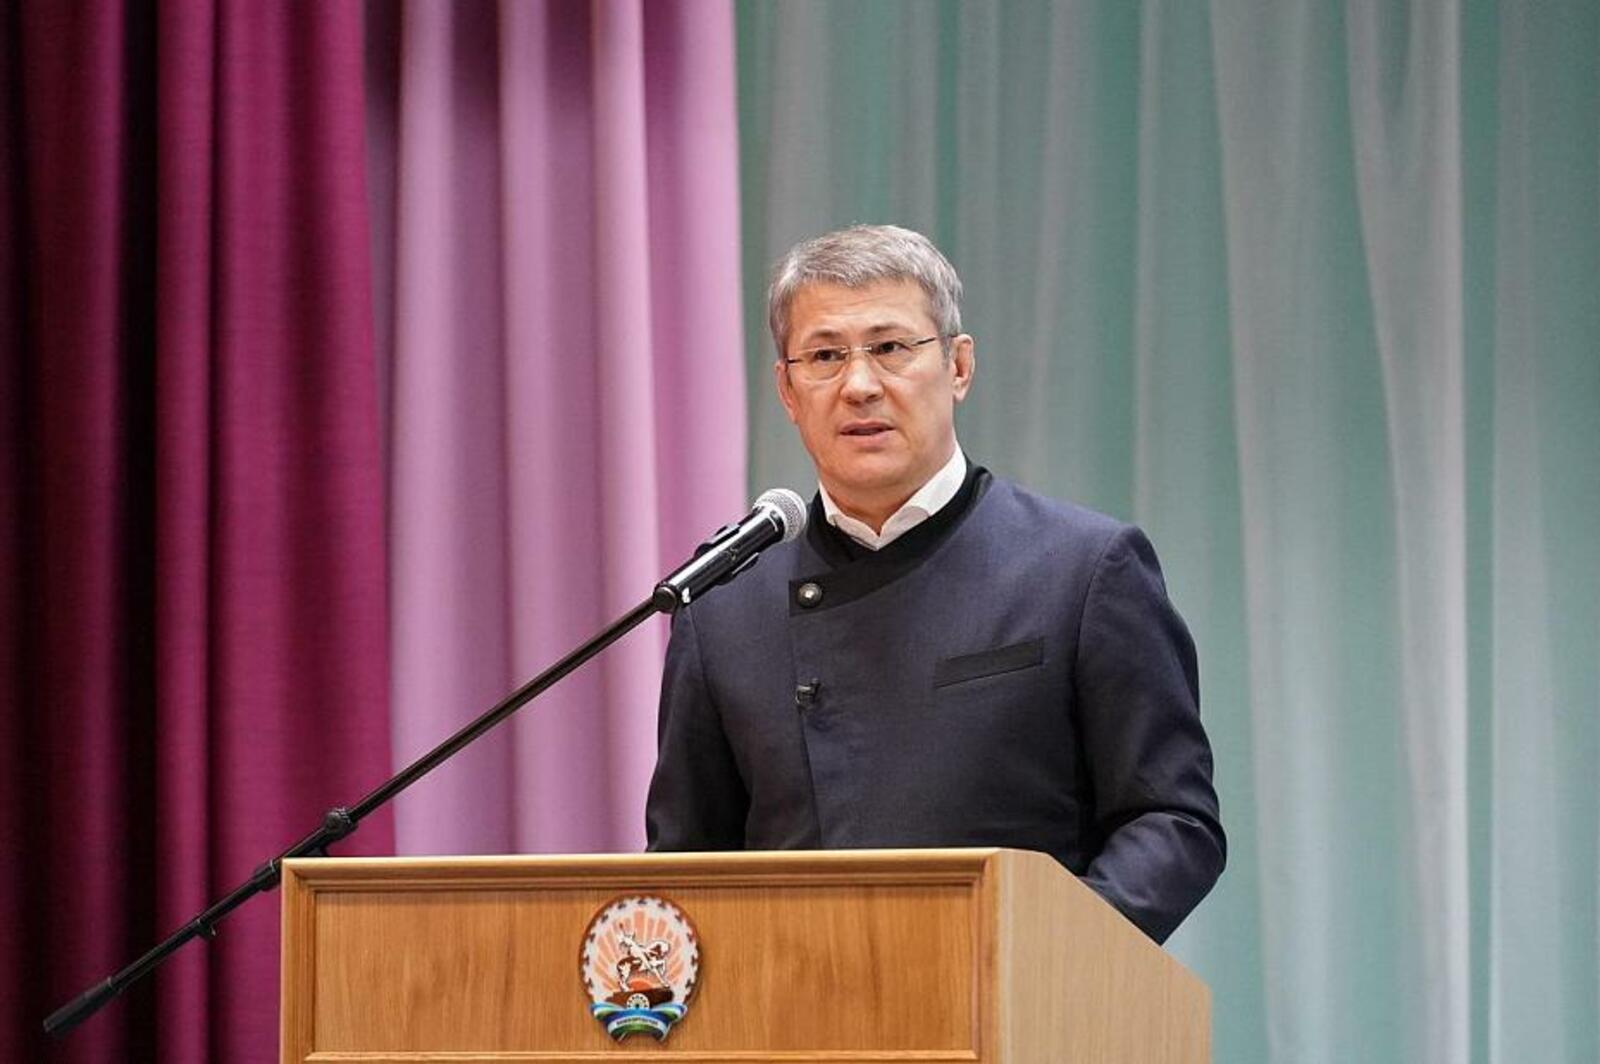 пресс - служба главы Башкортостана